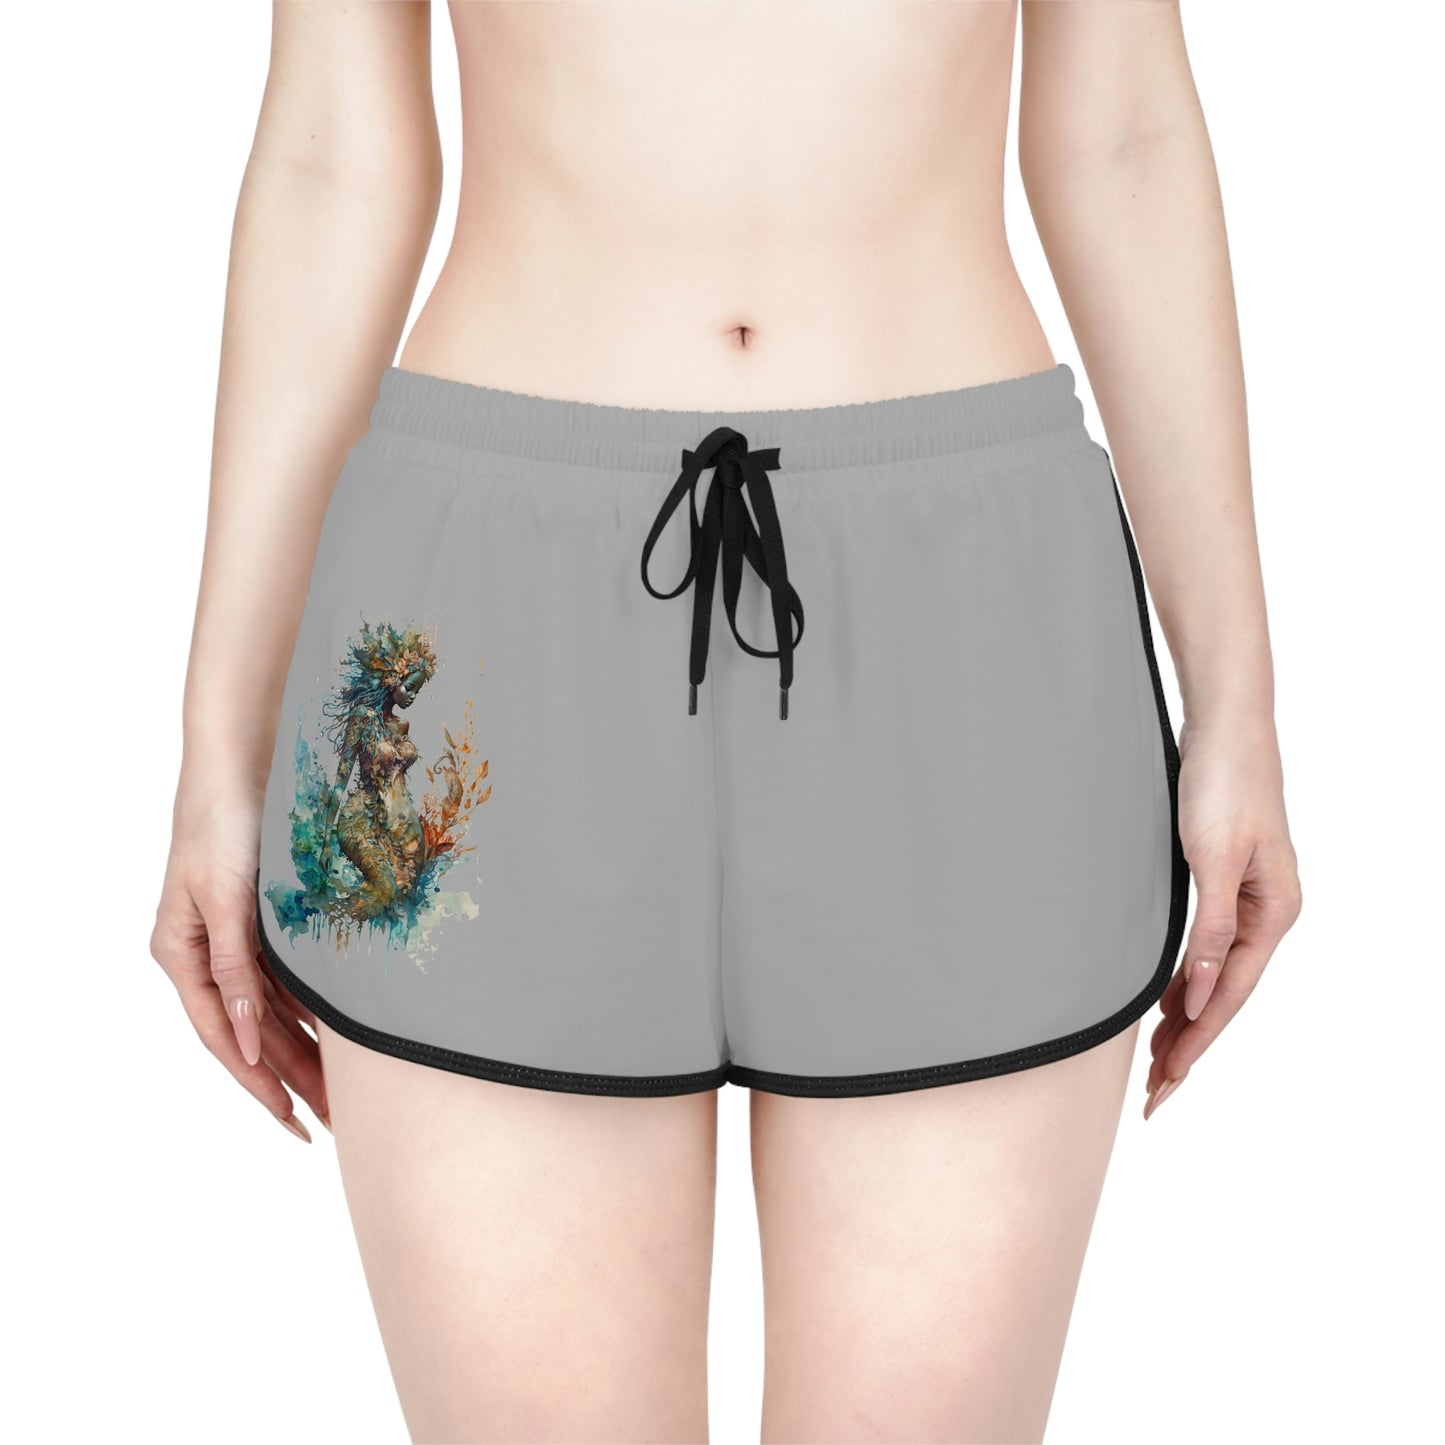 Mermaid Queen Shorts